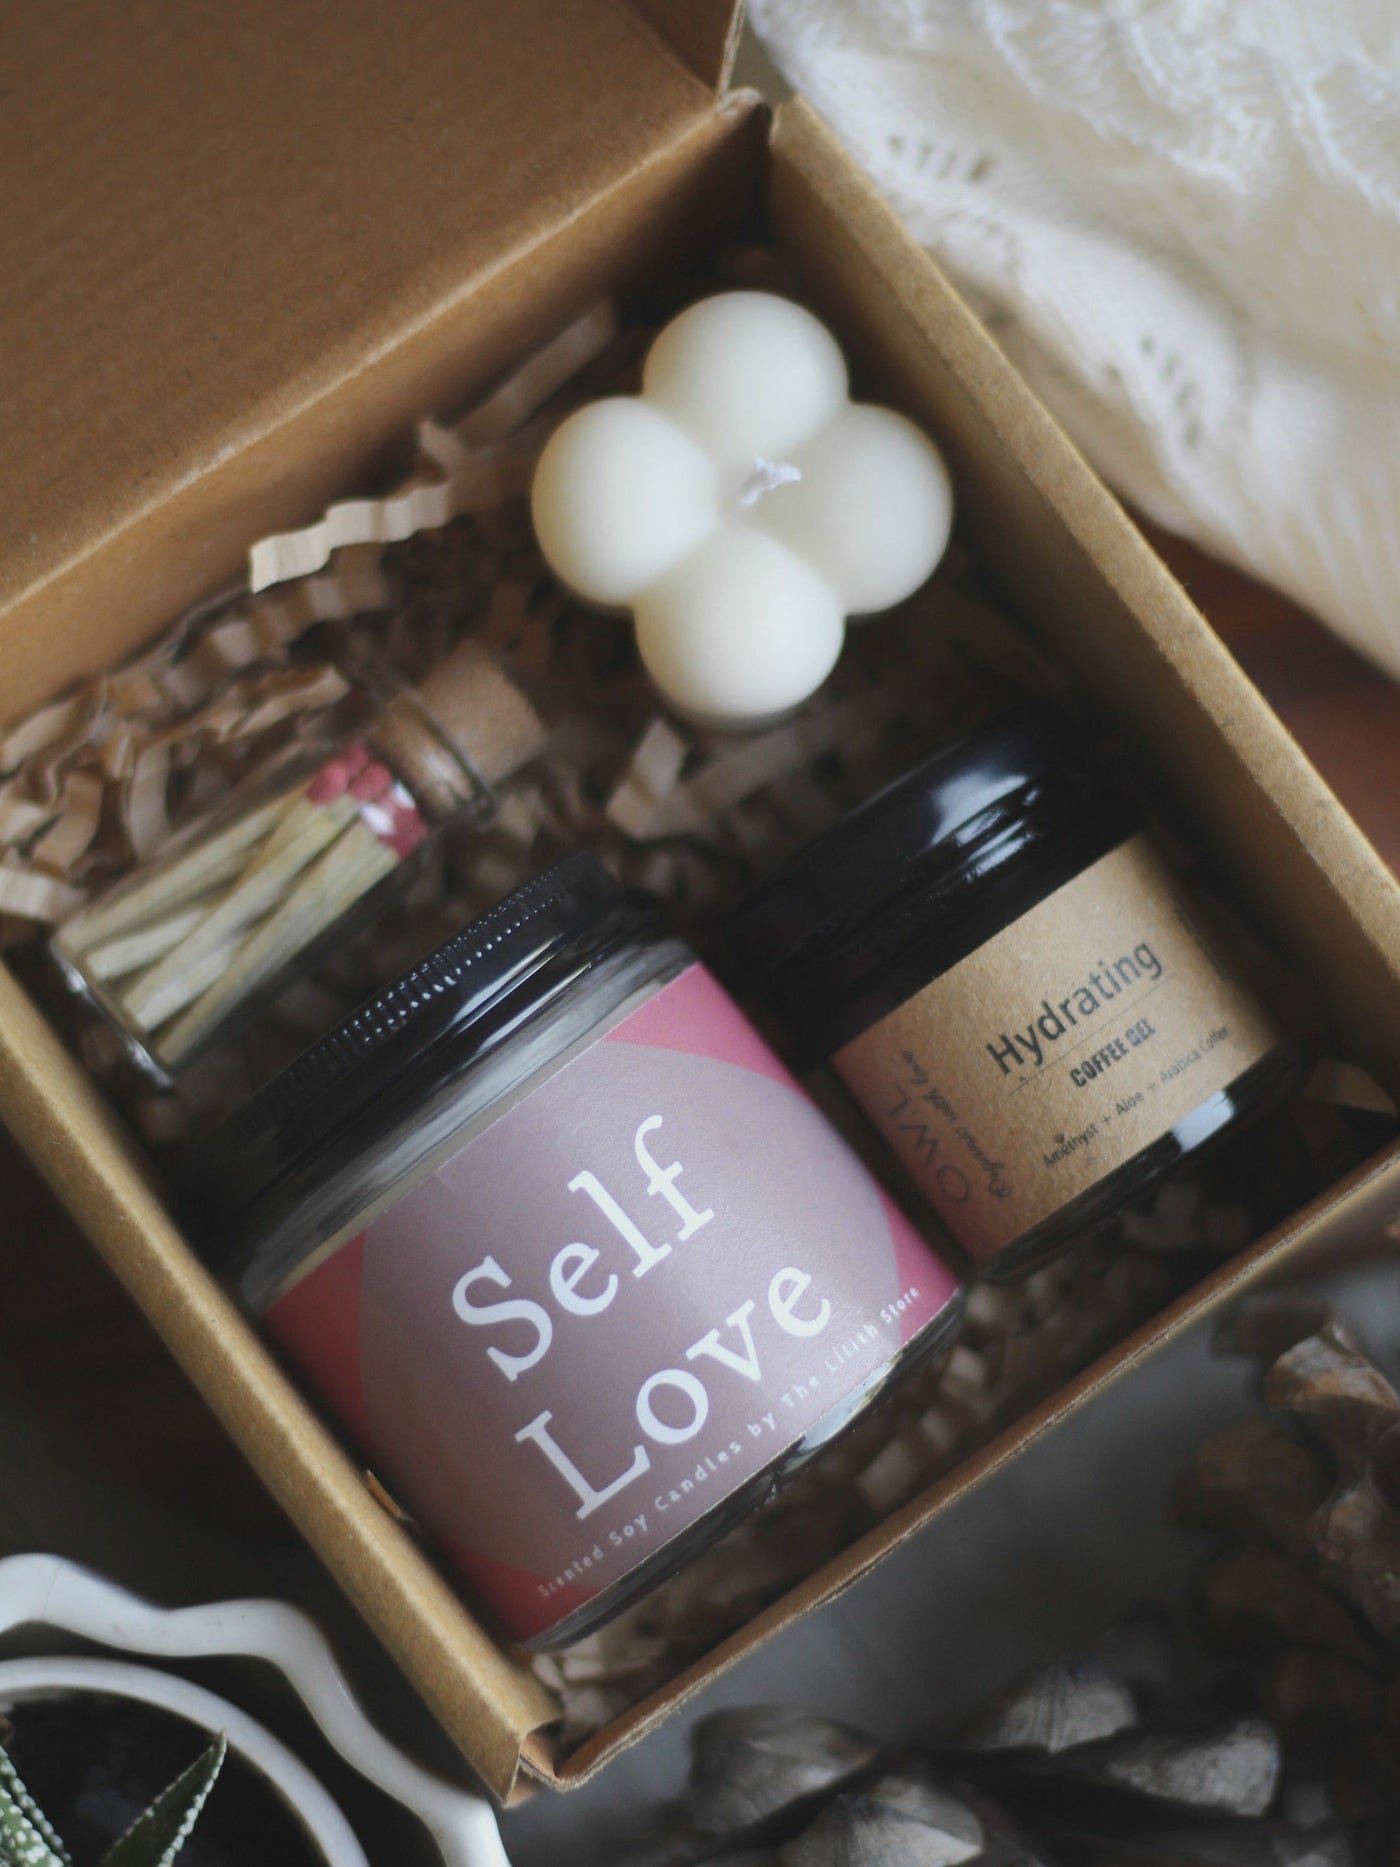 Self Love Gift Box